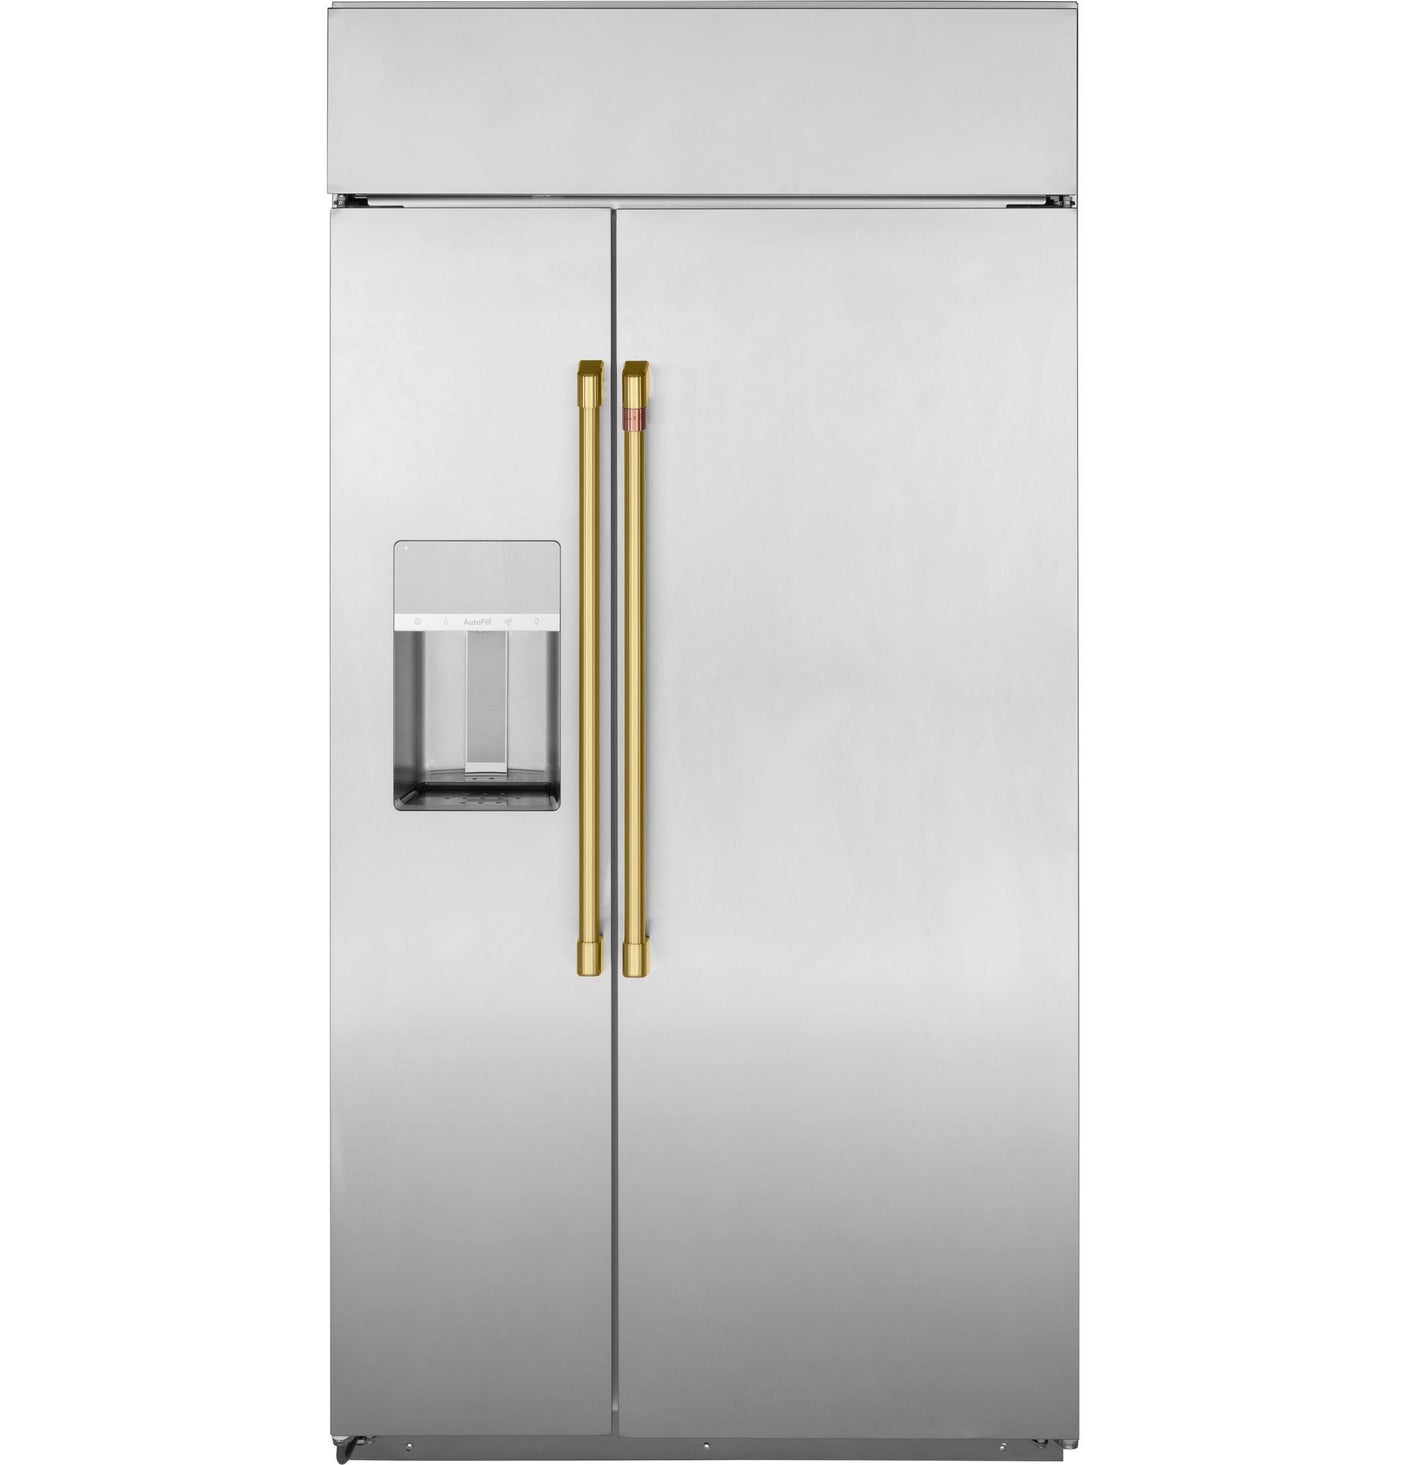 Café™ 42" Smart Built-In Side-by-Side Refrigerator with Dispenser